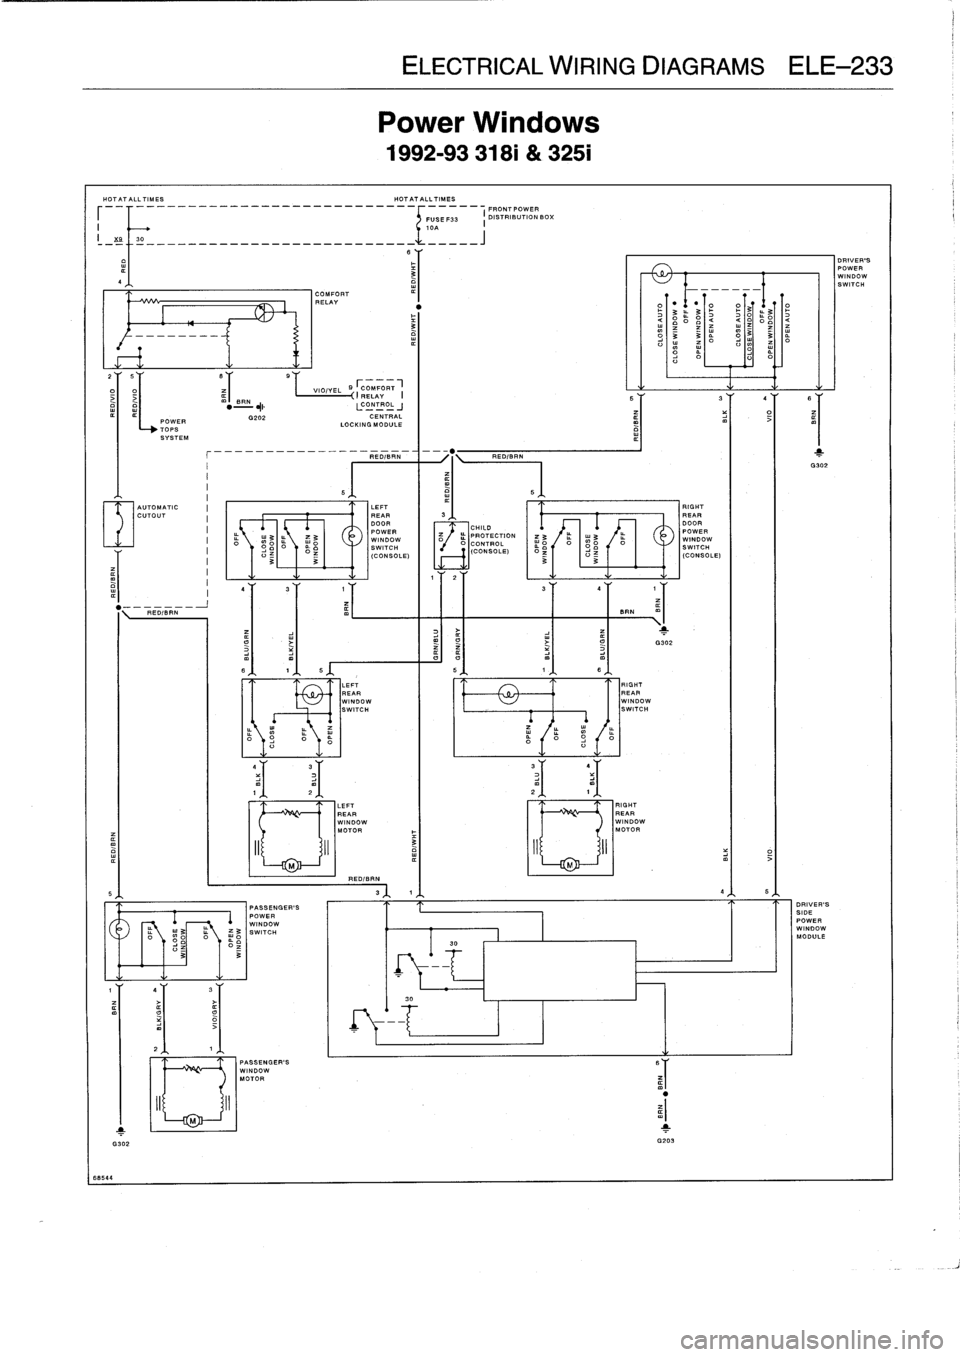 BMW M3 1994 E36 Workshop Manual 
HO7A7AlL71ME5

	

HOTATALLTIMES

r
--

68544

i

*---AAA
POWER

AUTOMATIC
CUTOUT

O

PASSENGERS
WINDOWMOTOR

V
1
G3D2

B
r
COMFDRT~
VIOIYEL
(IRELAY
I

ELECTRICAL
WIRING
DIAGRAMS
ELE-233

Power
Windo